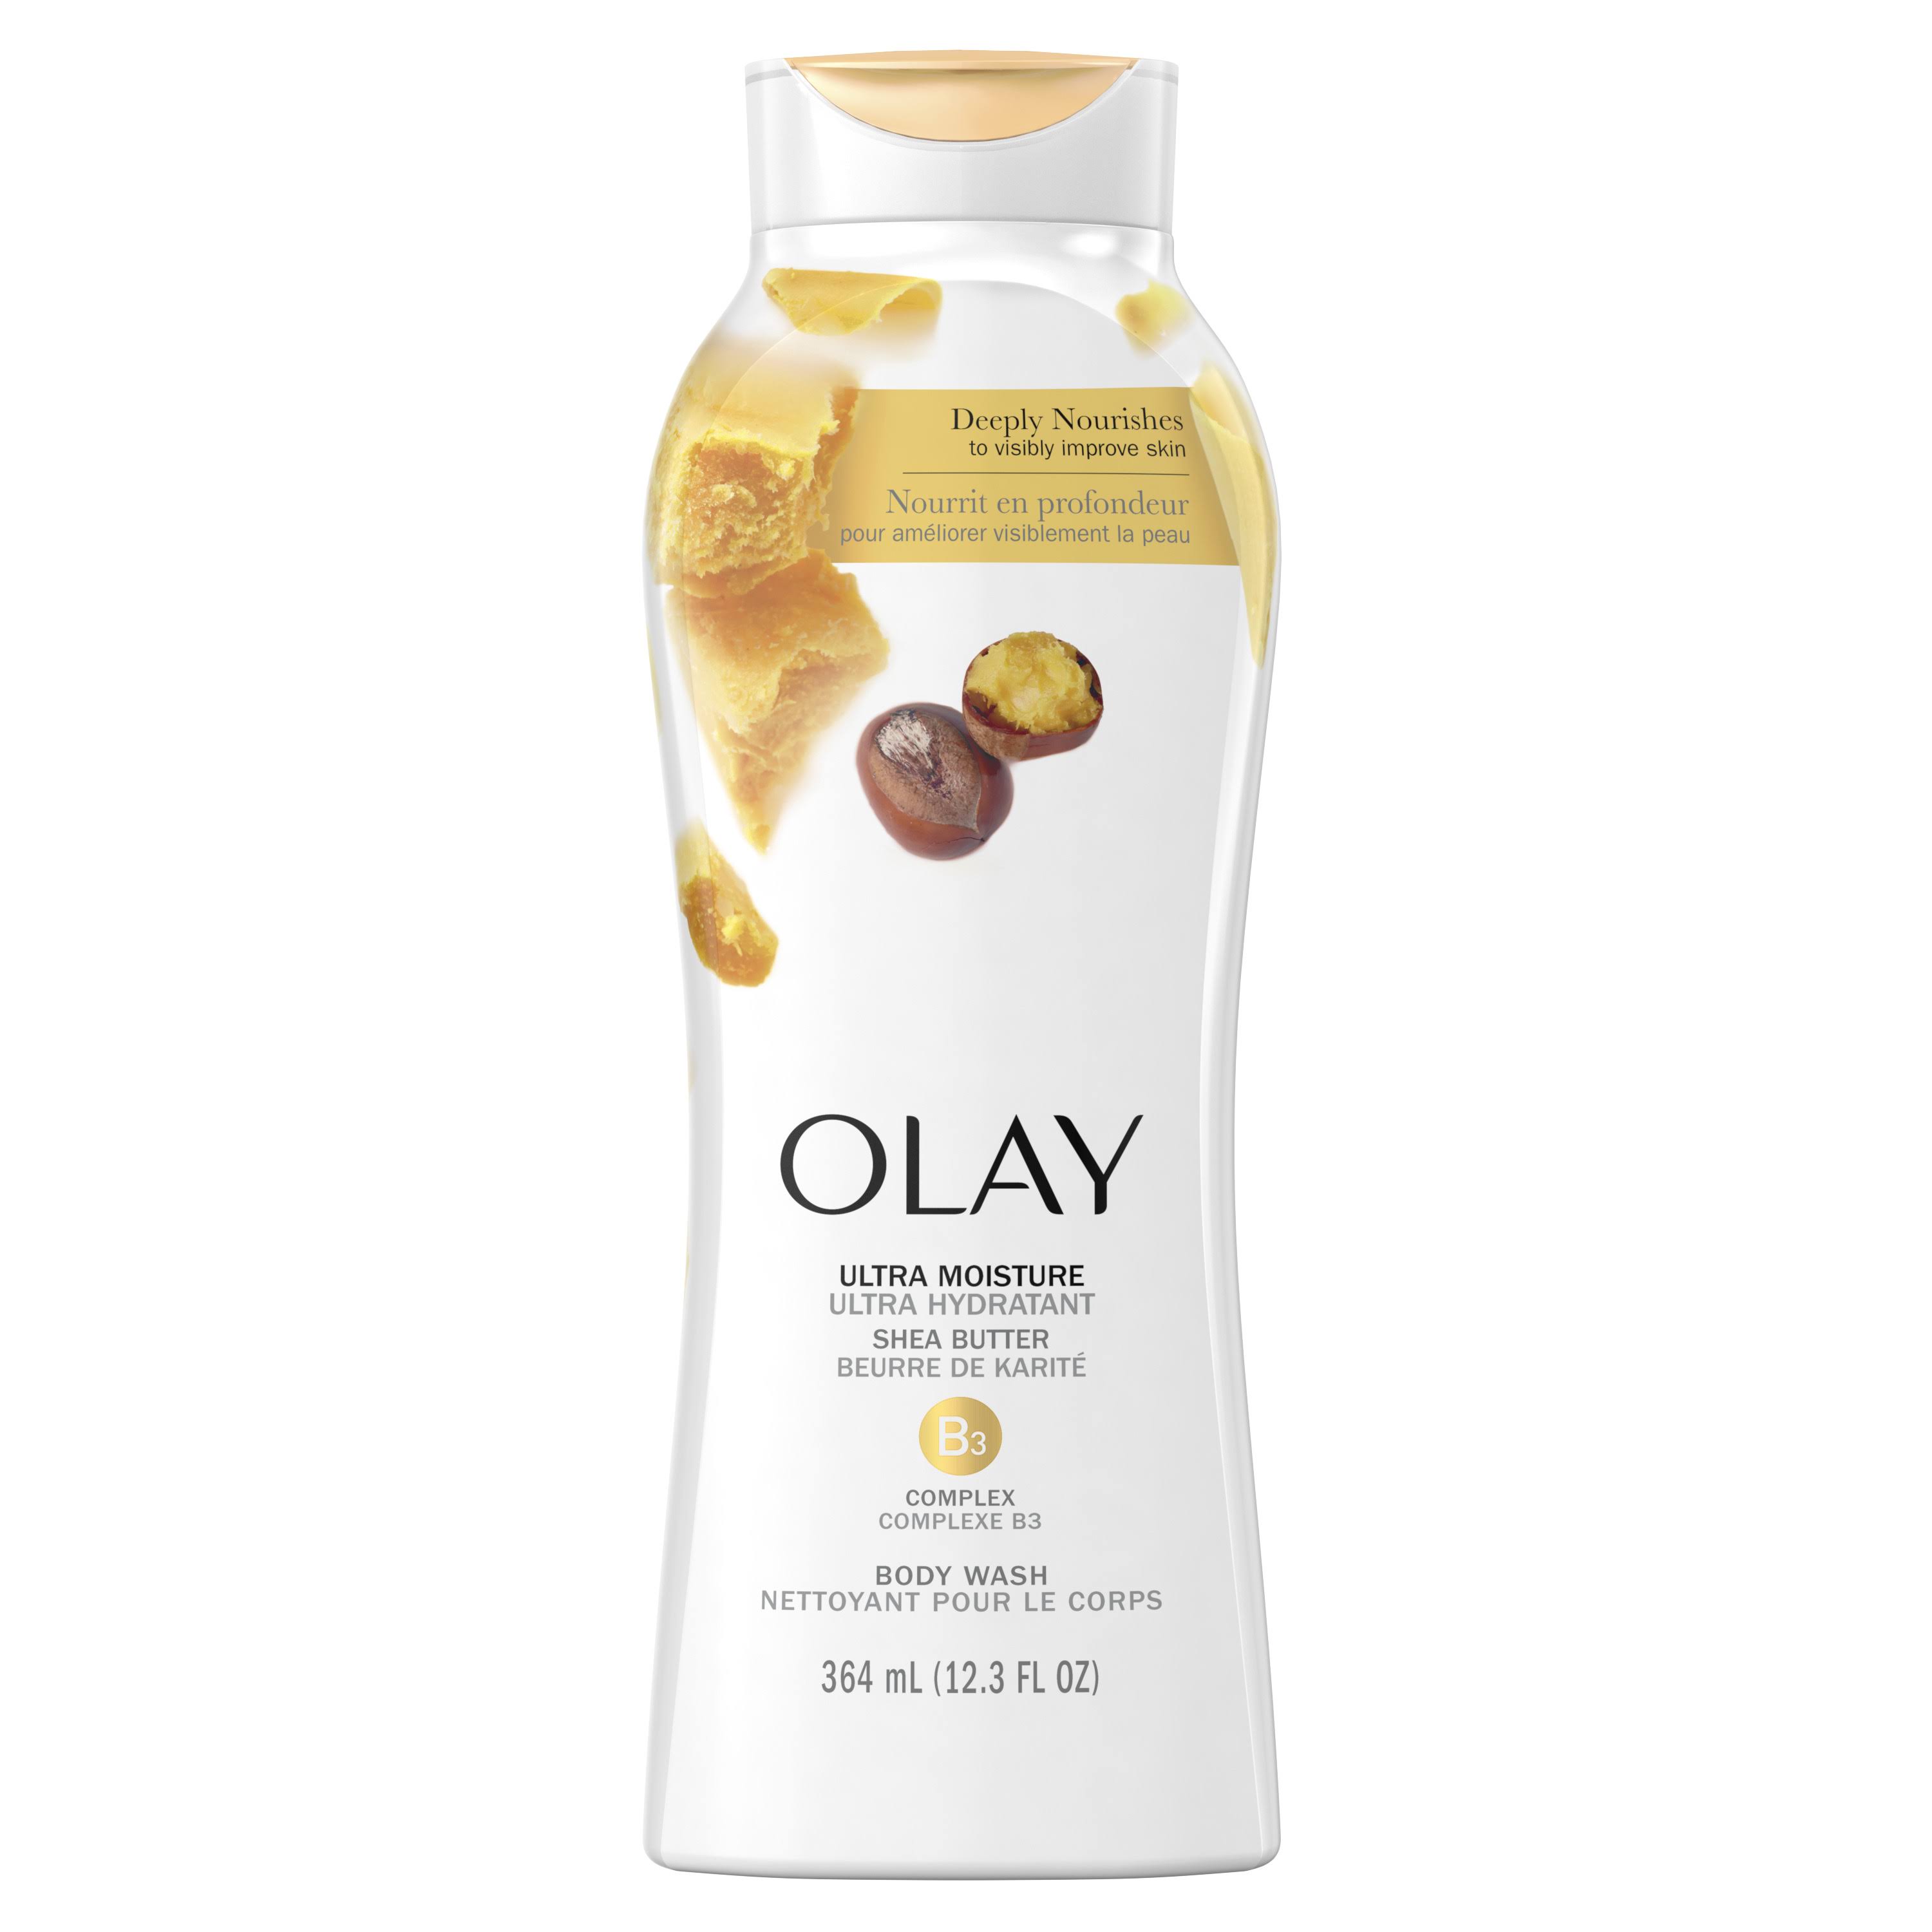 Olay Ultra Moisture Body Wash with Shea Butter - 12.3 fl oz